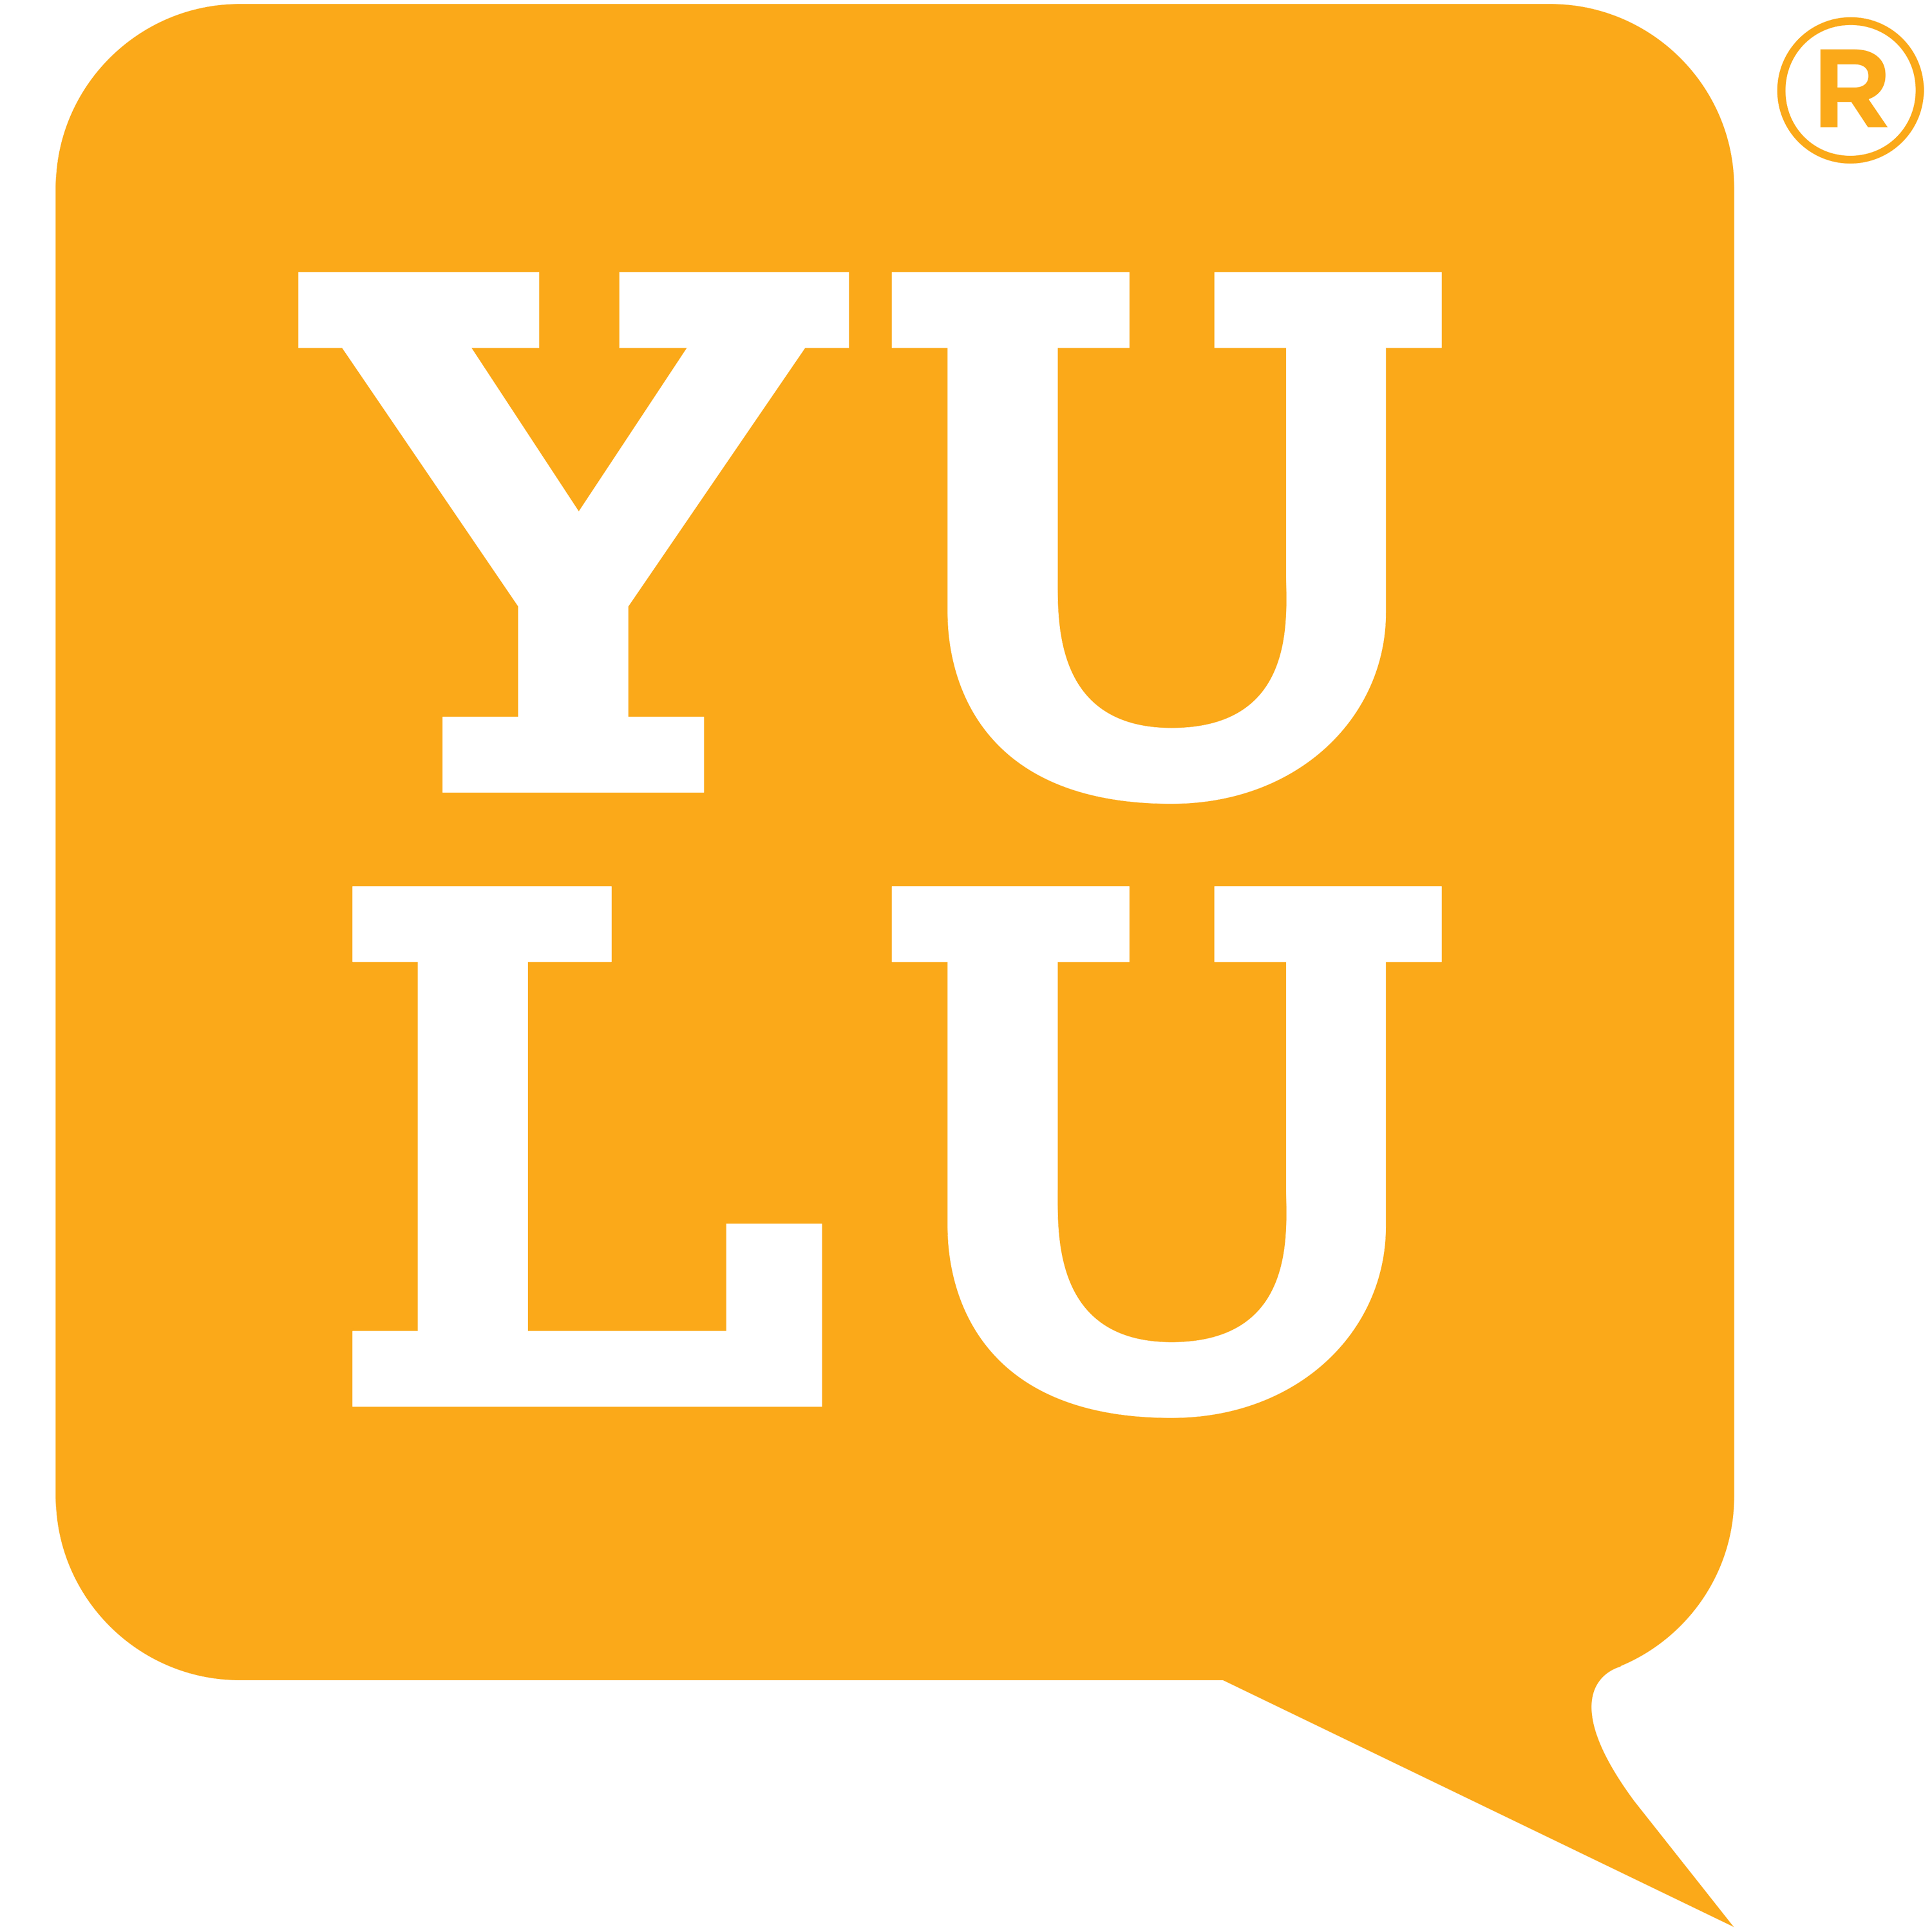 Yulu Public Relations Inc. - Logo - https://s41078.pcdn.co/wp-content/uploads/2018/03/csr-agency.png